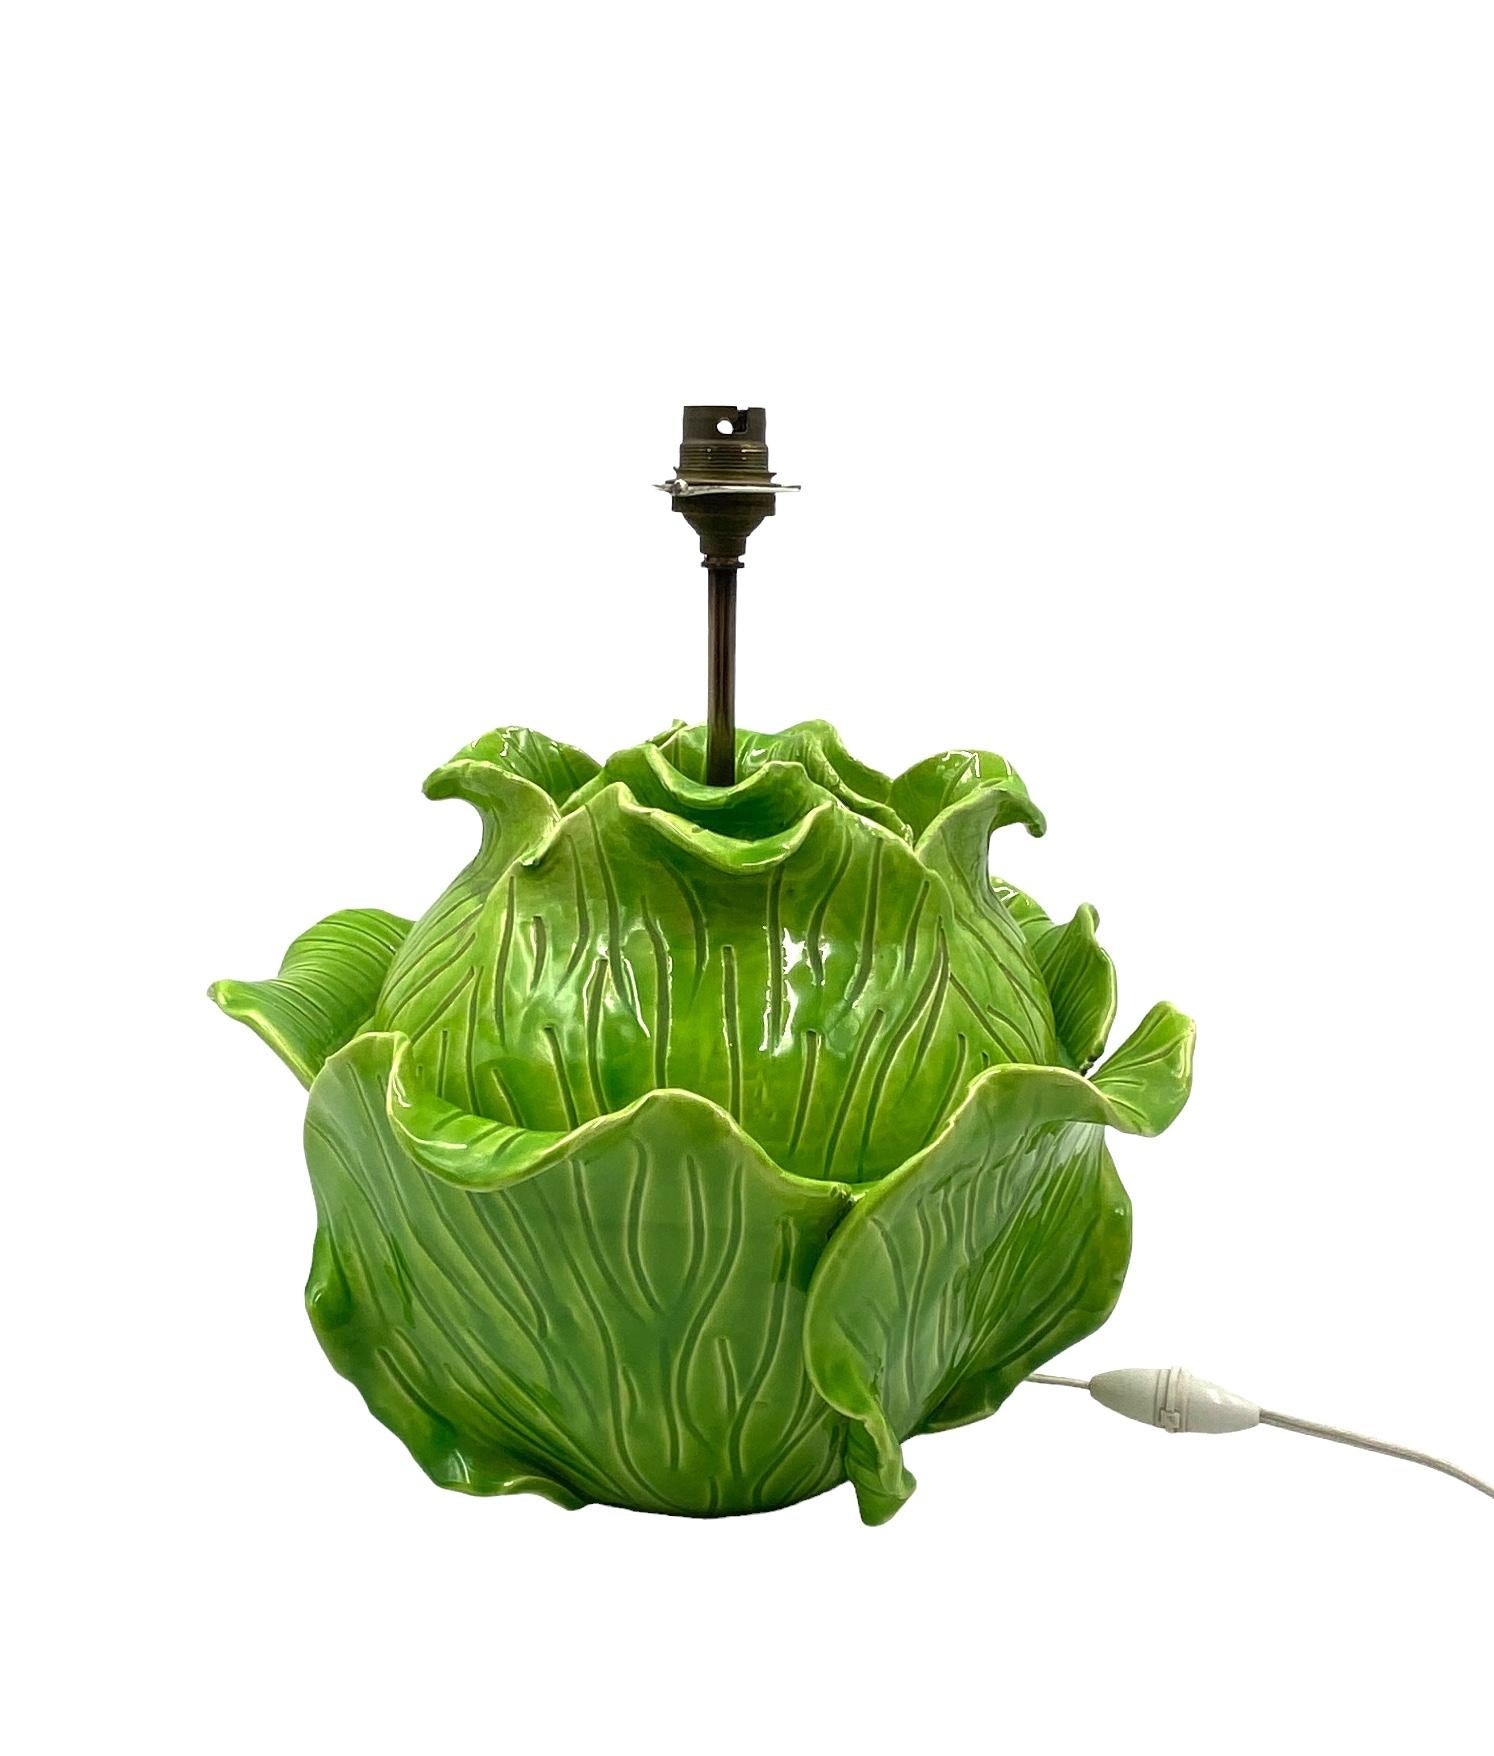 Jean Roger, Life Size Ceramic Lettuce Lamp, Paris France 1950s For Sale 7